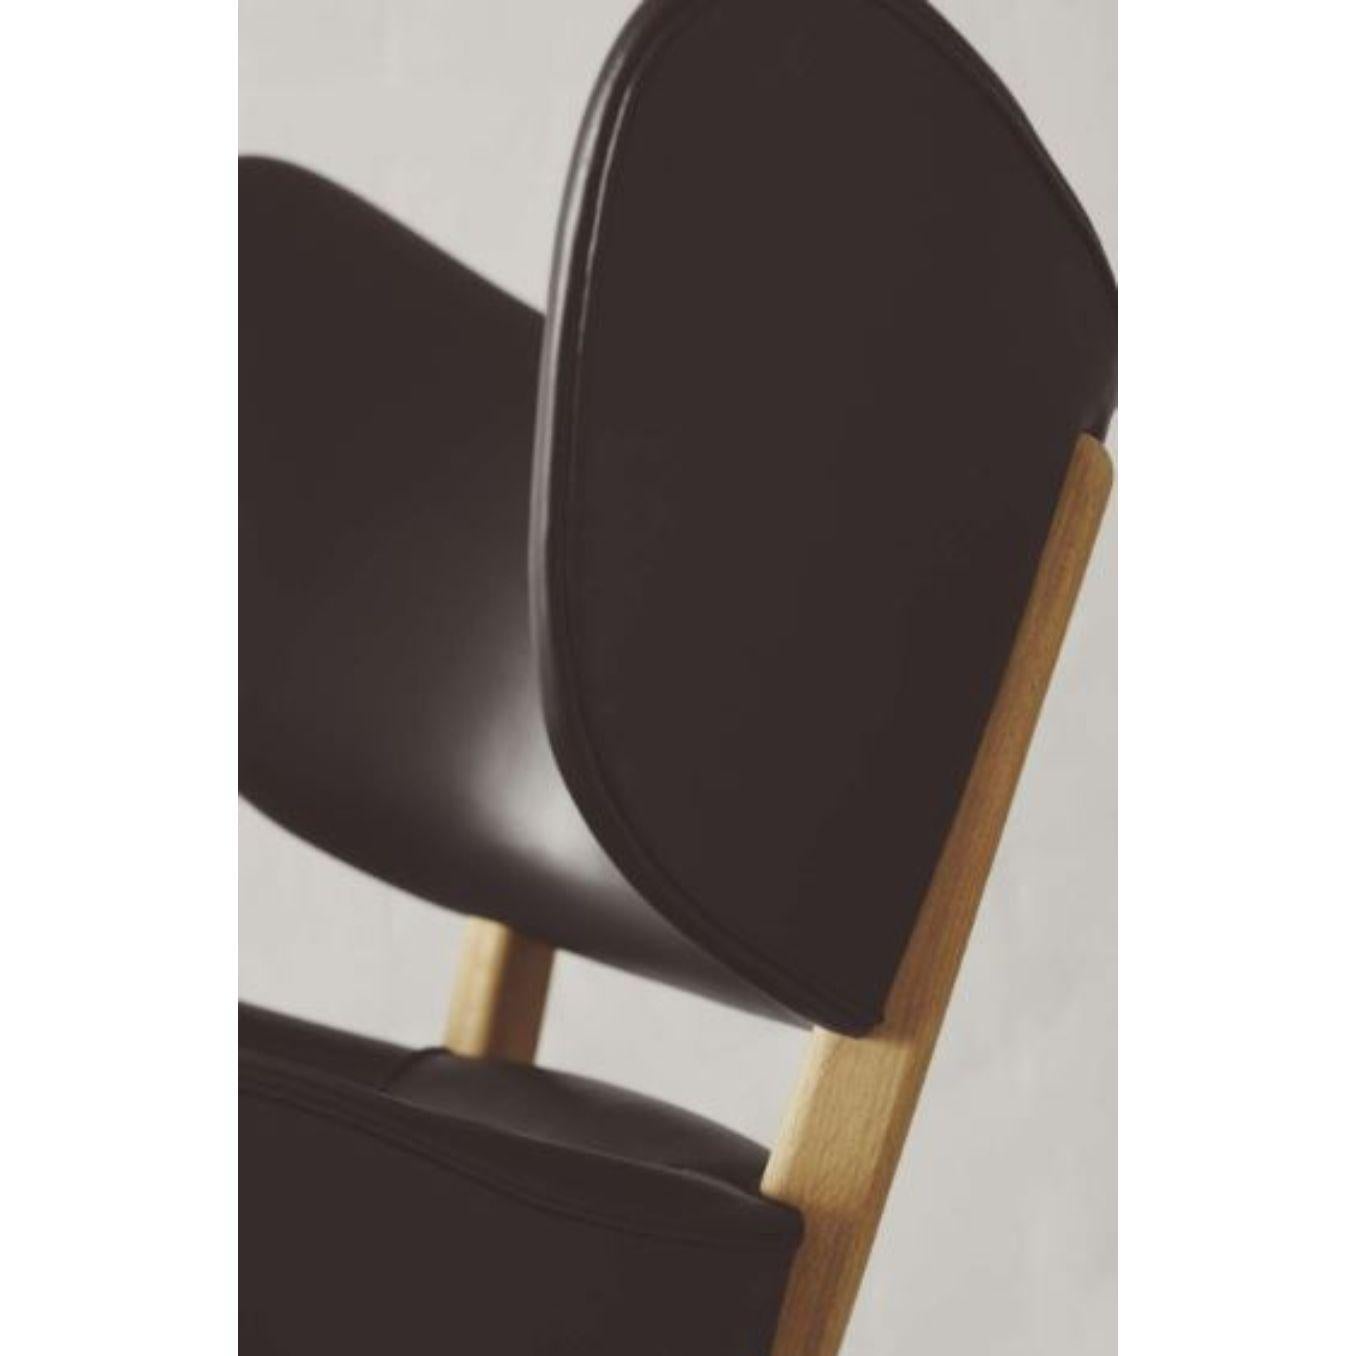 123 Raf Simons Vidar 3 My Own Chair by Lassen For Sale 5